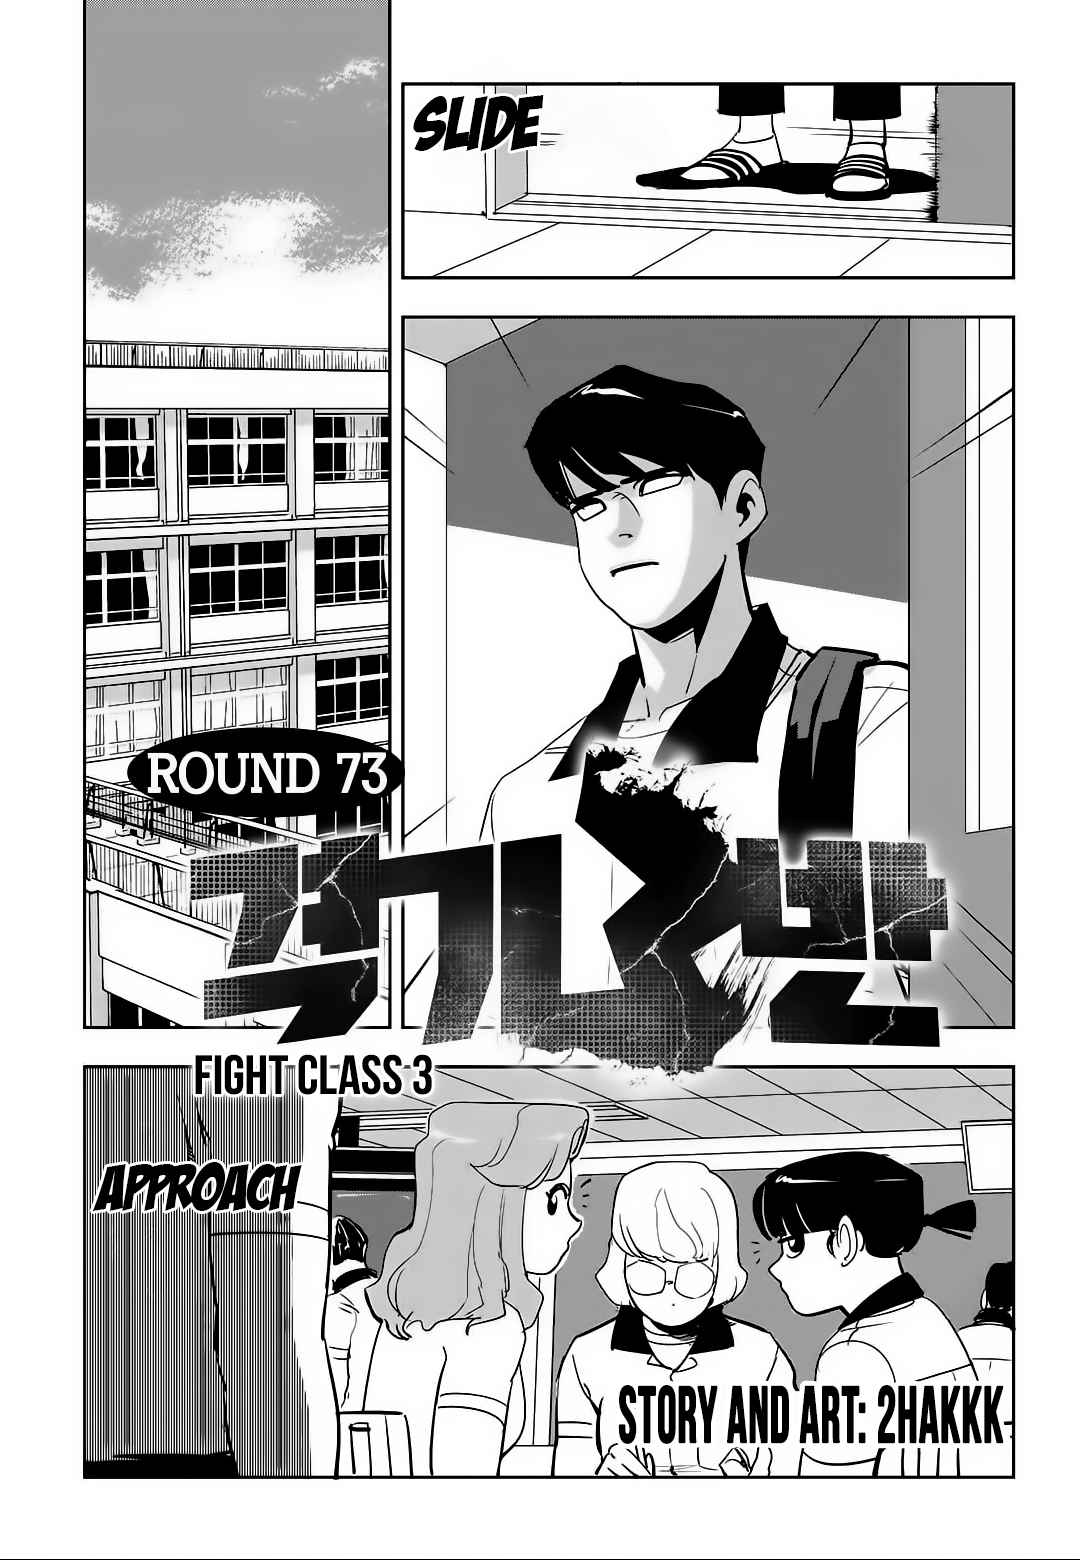 Fight Class 3 Ch. 73 Round 73